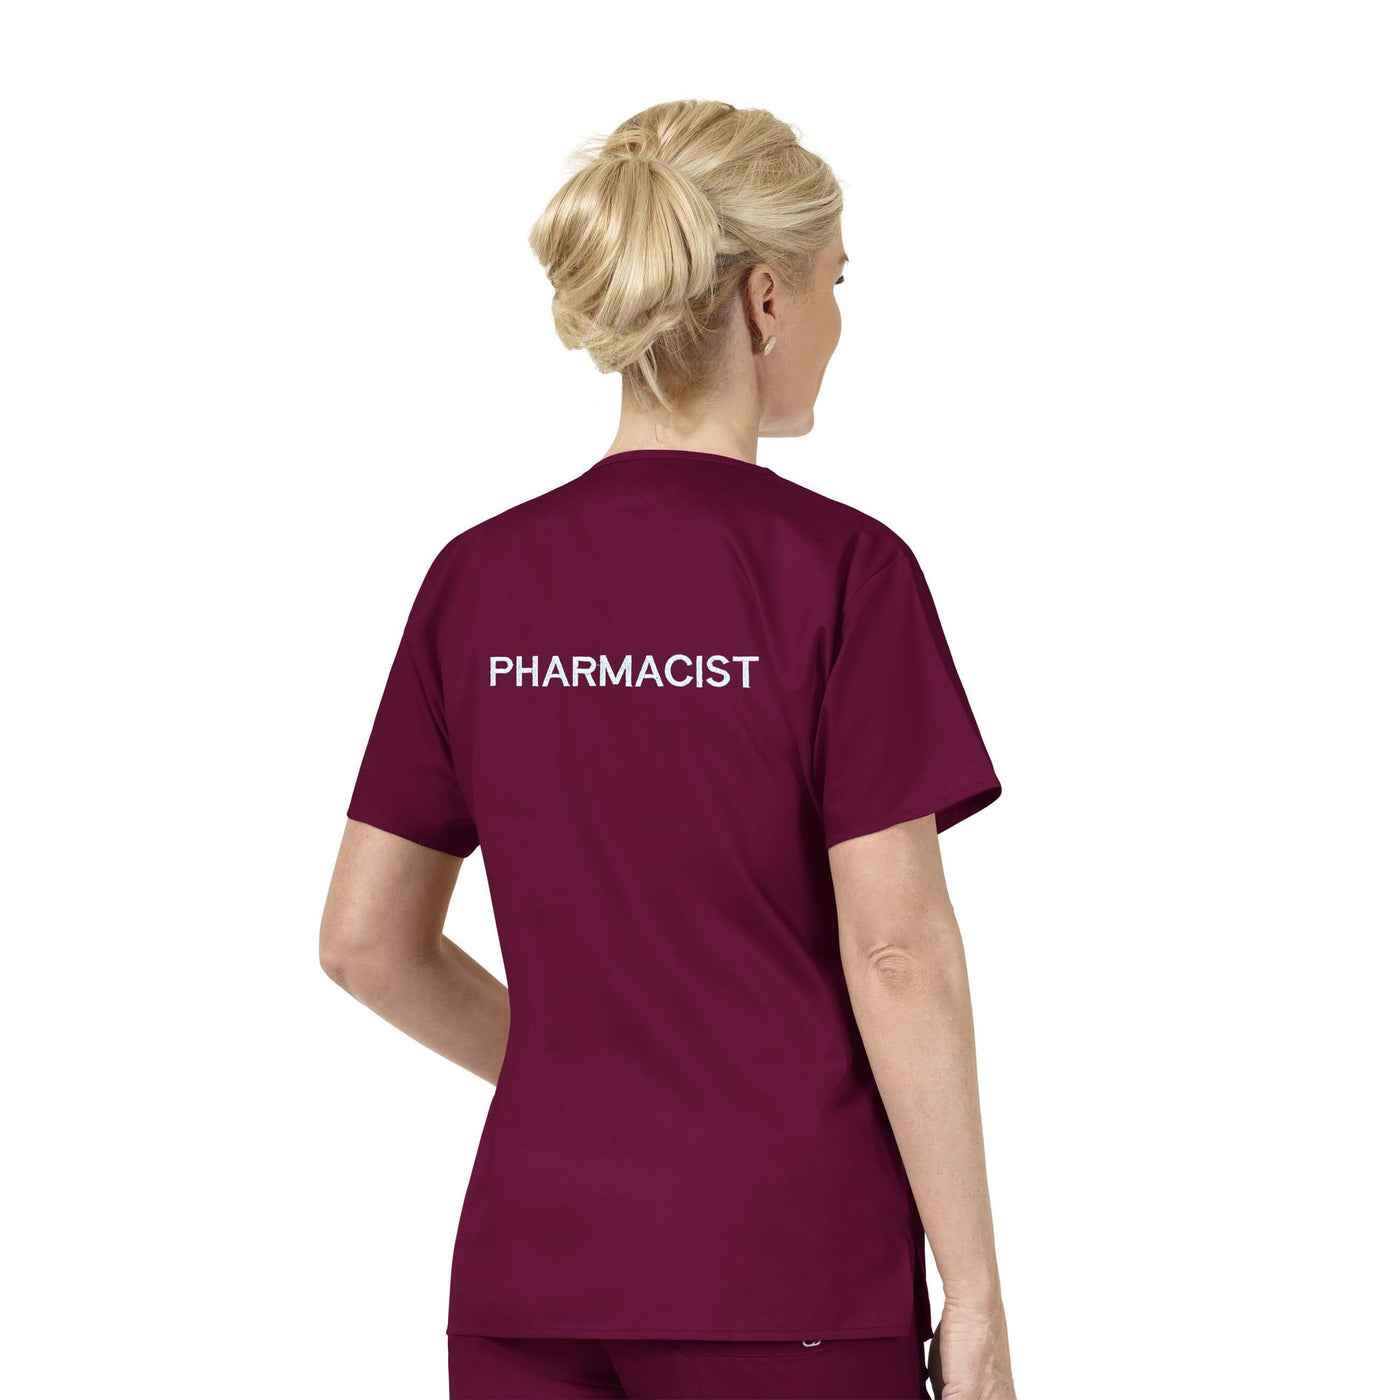 Embroidery Stock Logos - Pharmacist